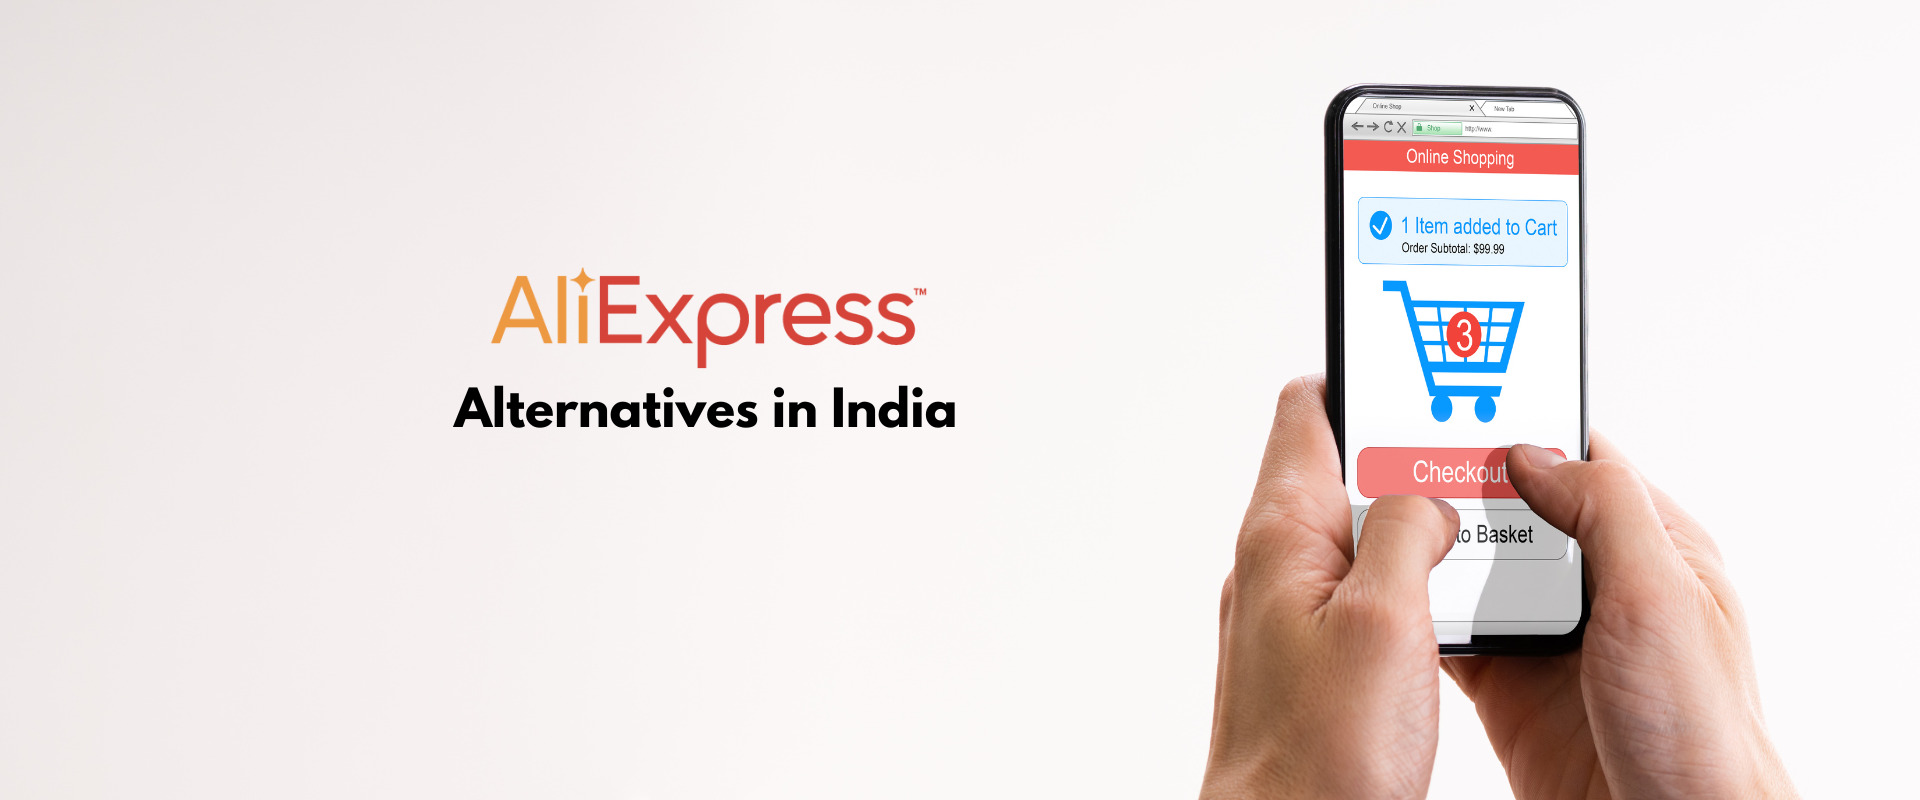 Aliexpress in India - Aliexpress alternatives